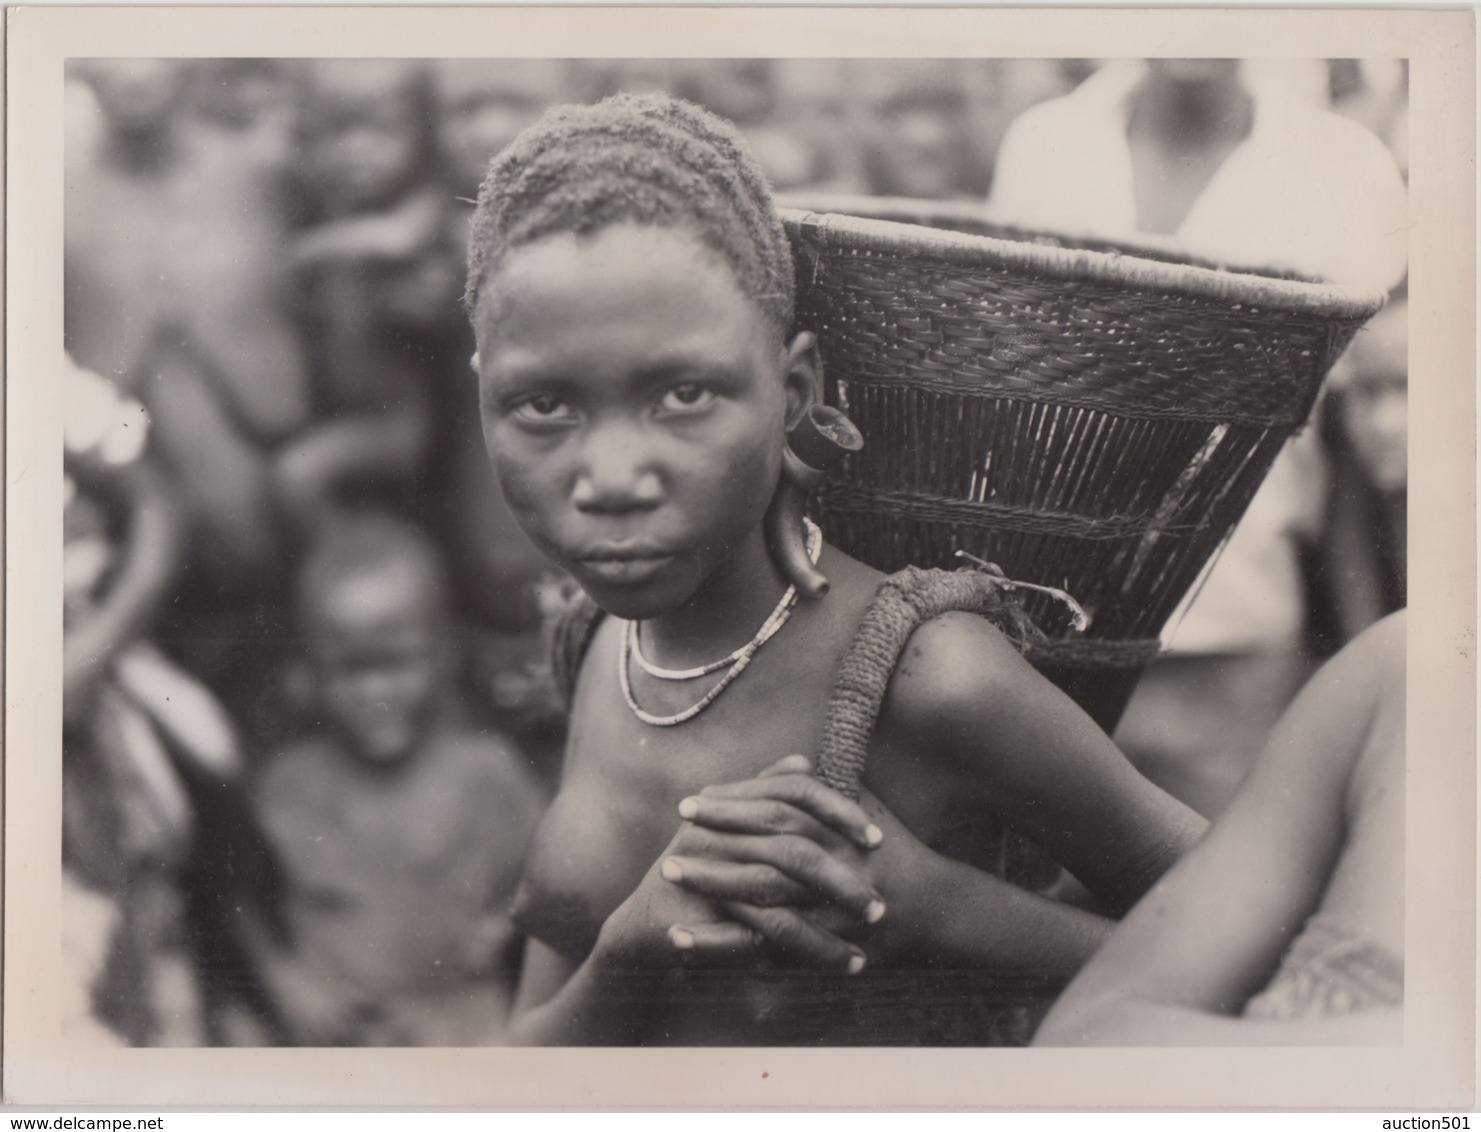 28703g CONGO BELGE -KIMBAU - FILLE BASUKU - Photo De Presse - Ethnographique - Van Den Heuvel -18x24c - Seins Nus - Afrique